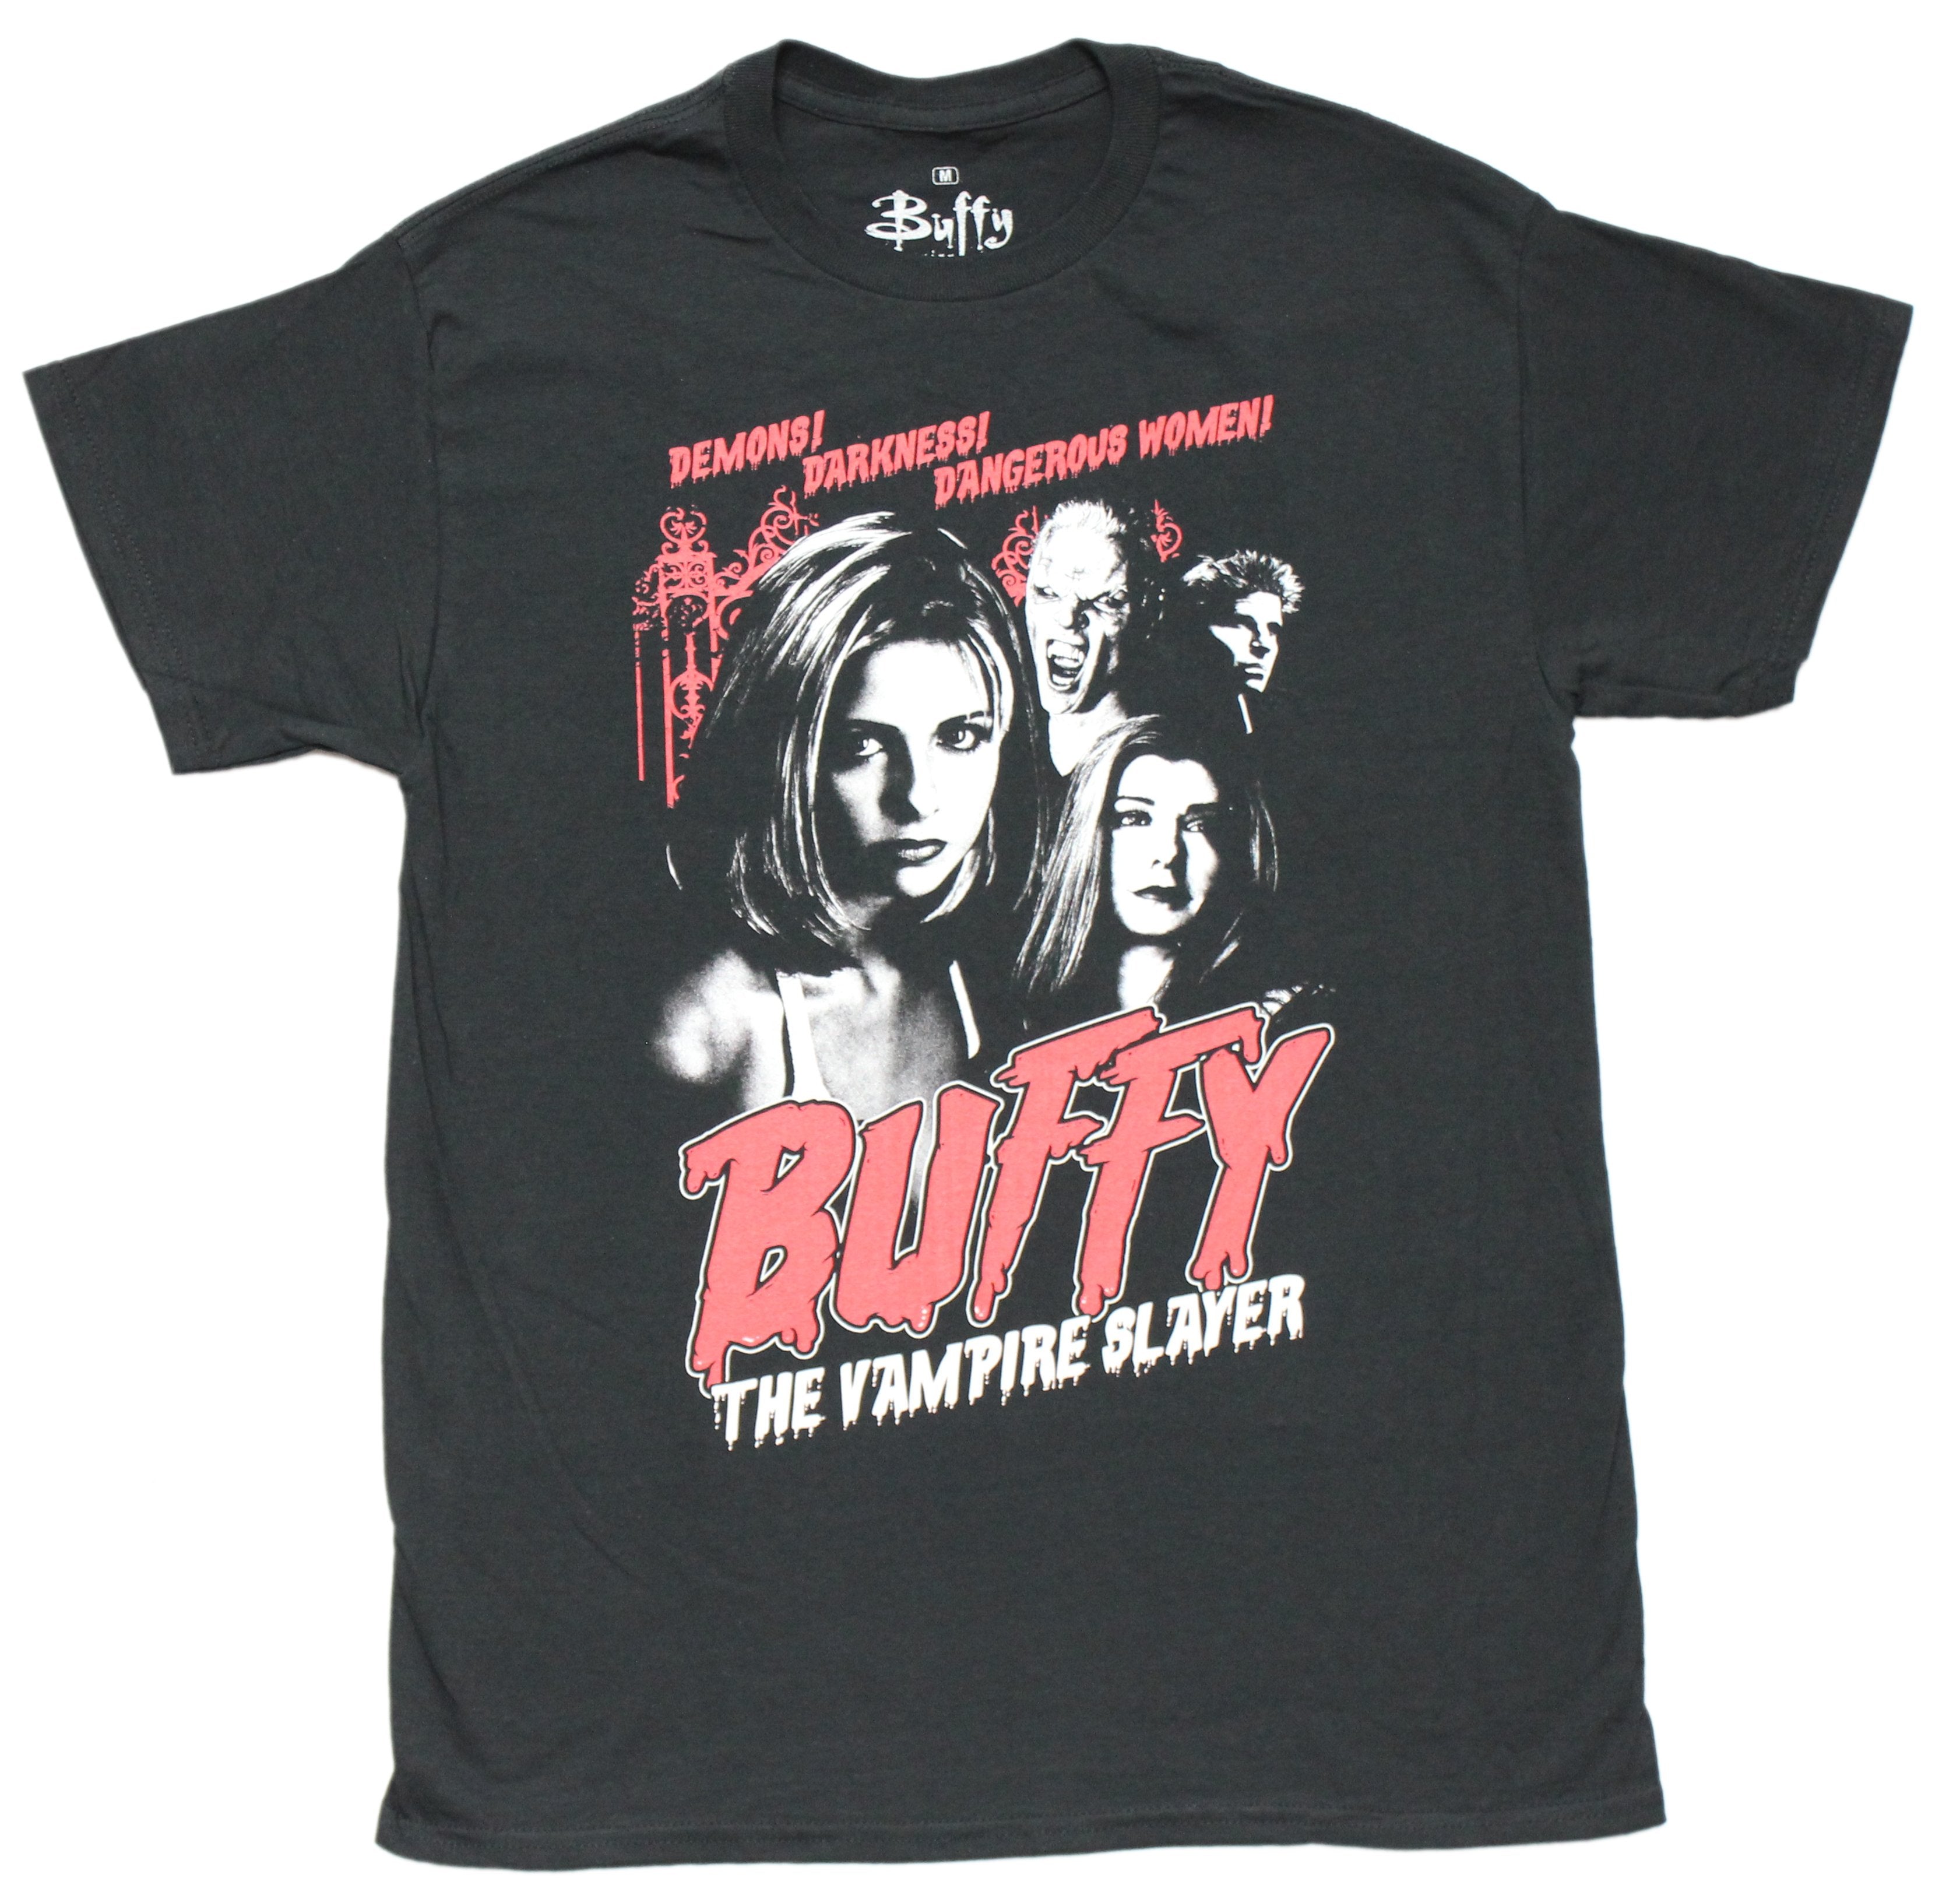 Buffy the Vampire Slayer Mens T-Shirt - Demons Darkness Dangerous Women